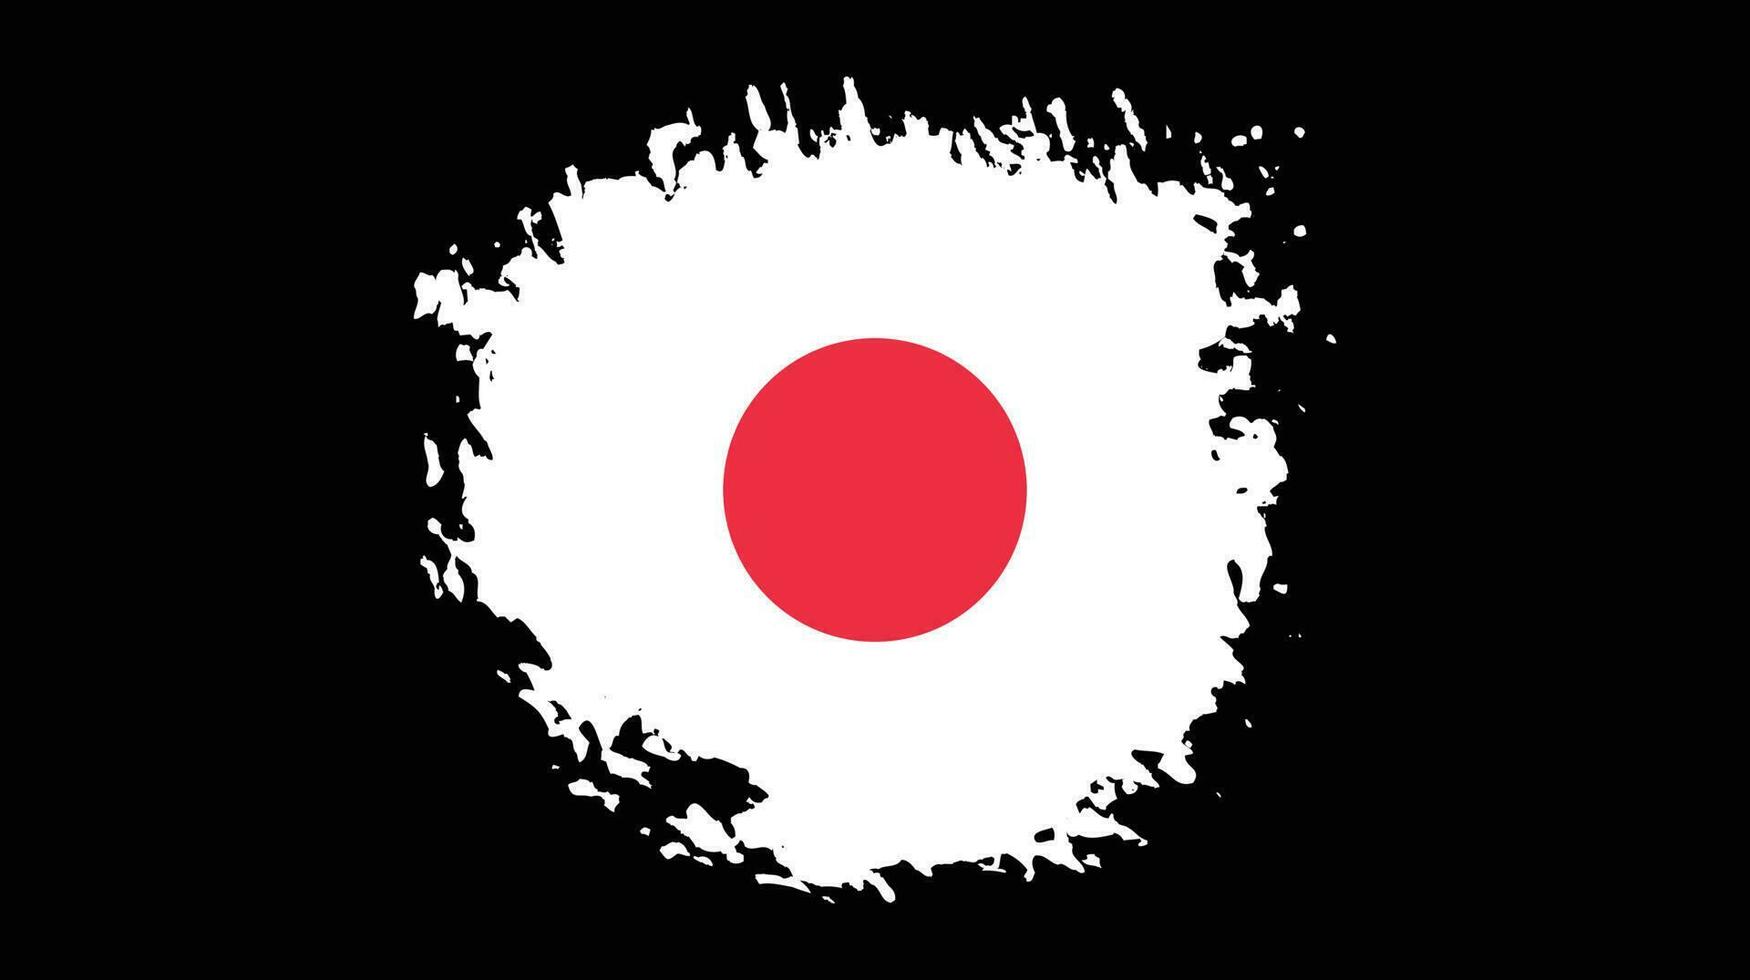 Paint brush stroke Japan flag vector for free download